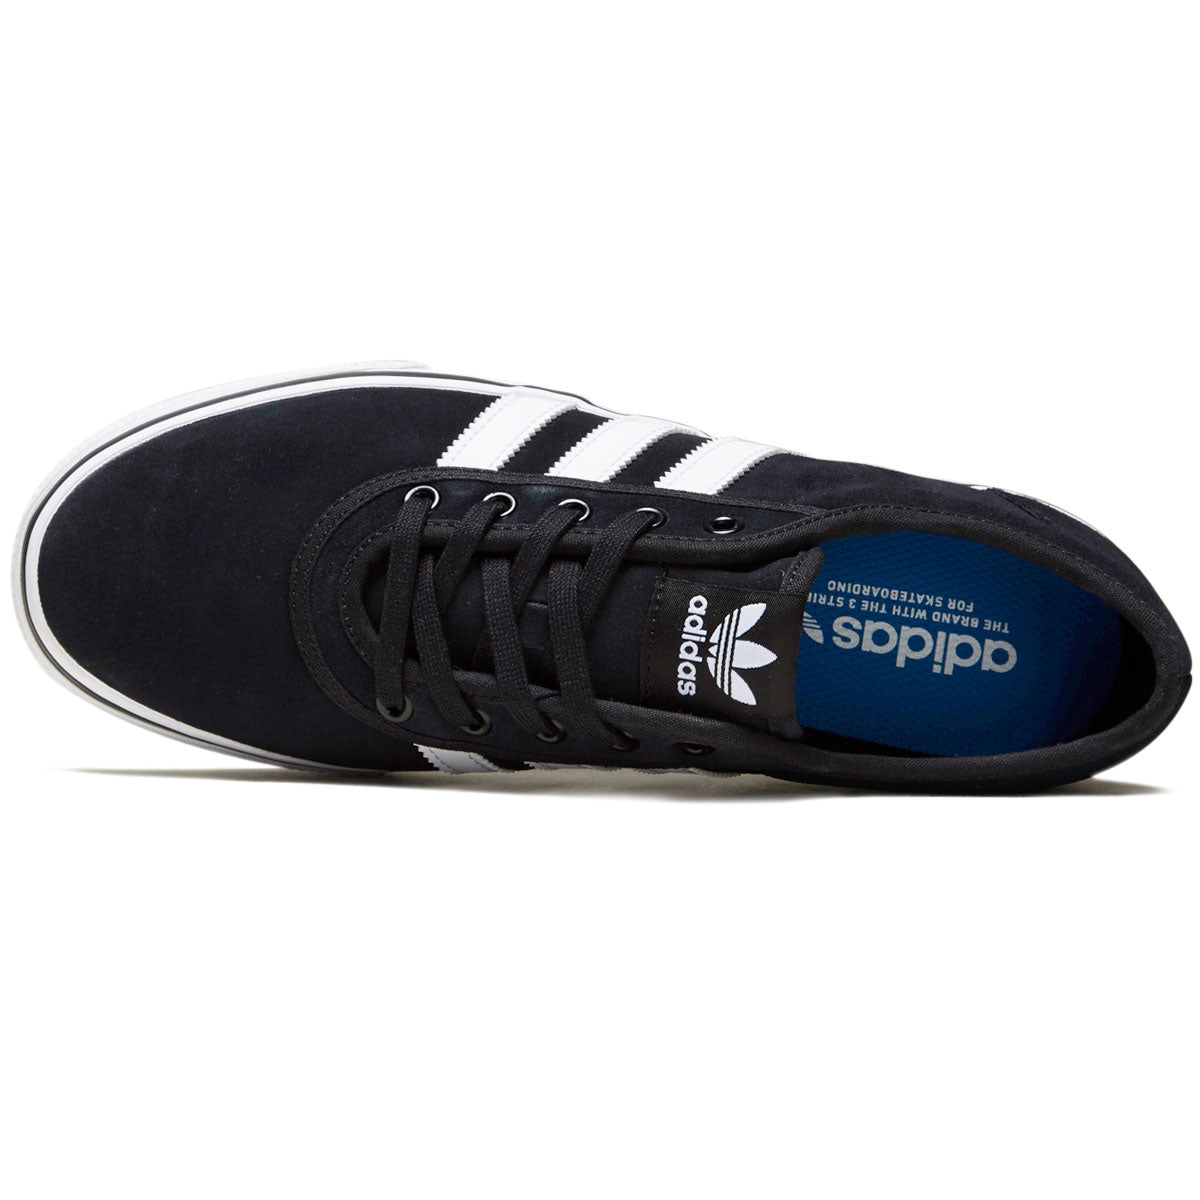 Adidas Adi Ease Shoes - Core Black/White/White – CCS